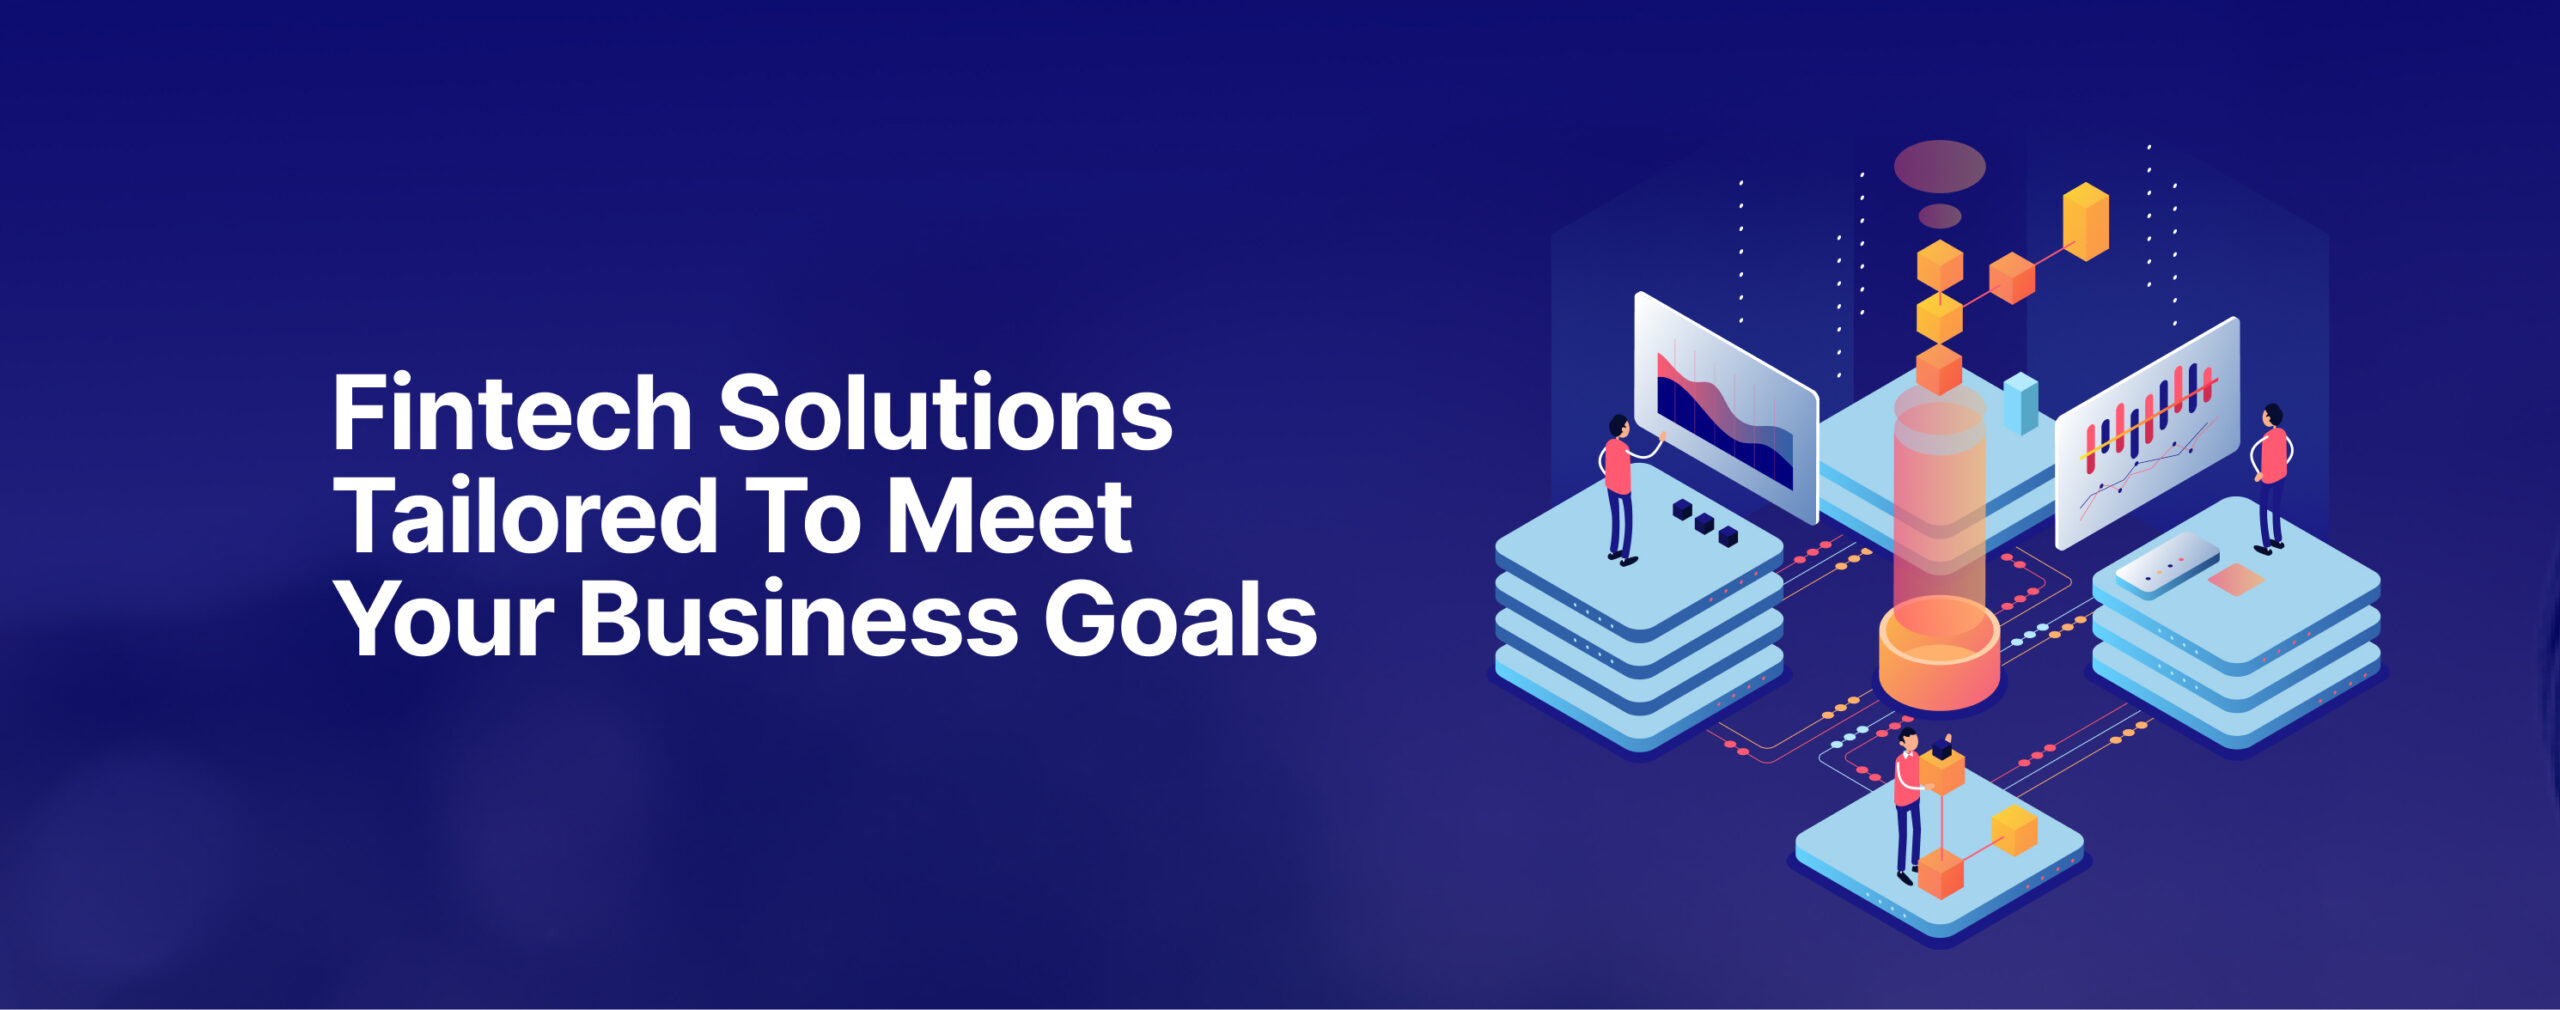 Fintech-Solutions-Tailored-To-Meet-Your-Business-Goals